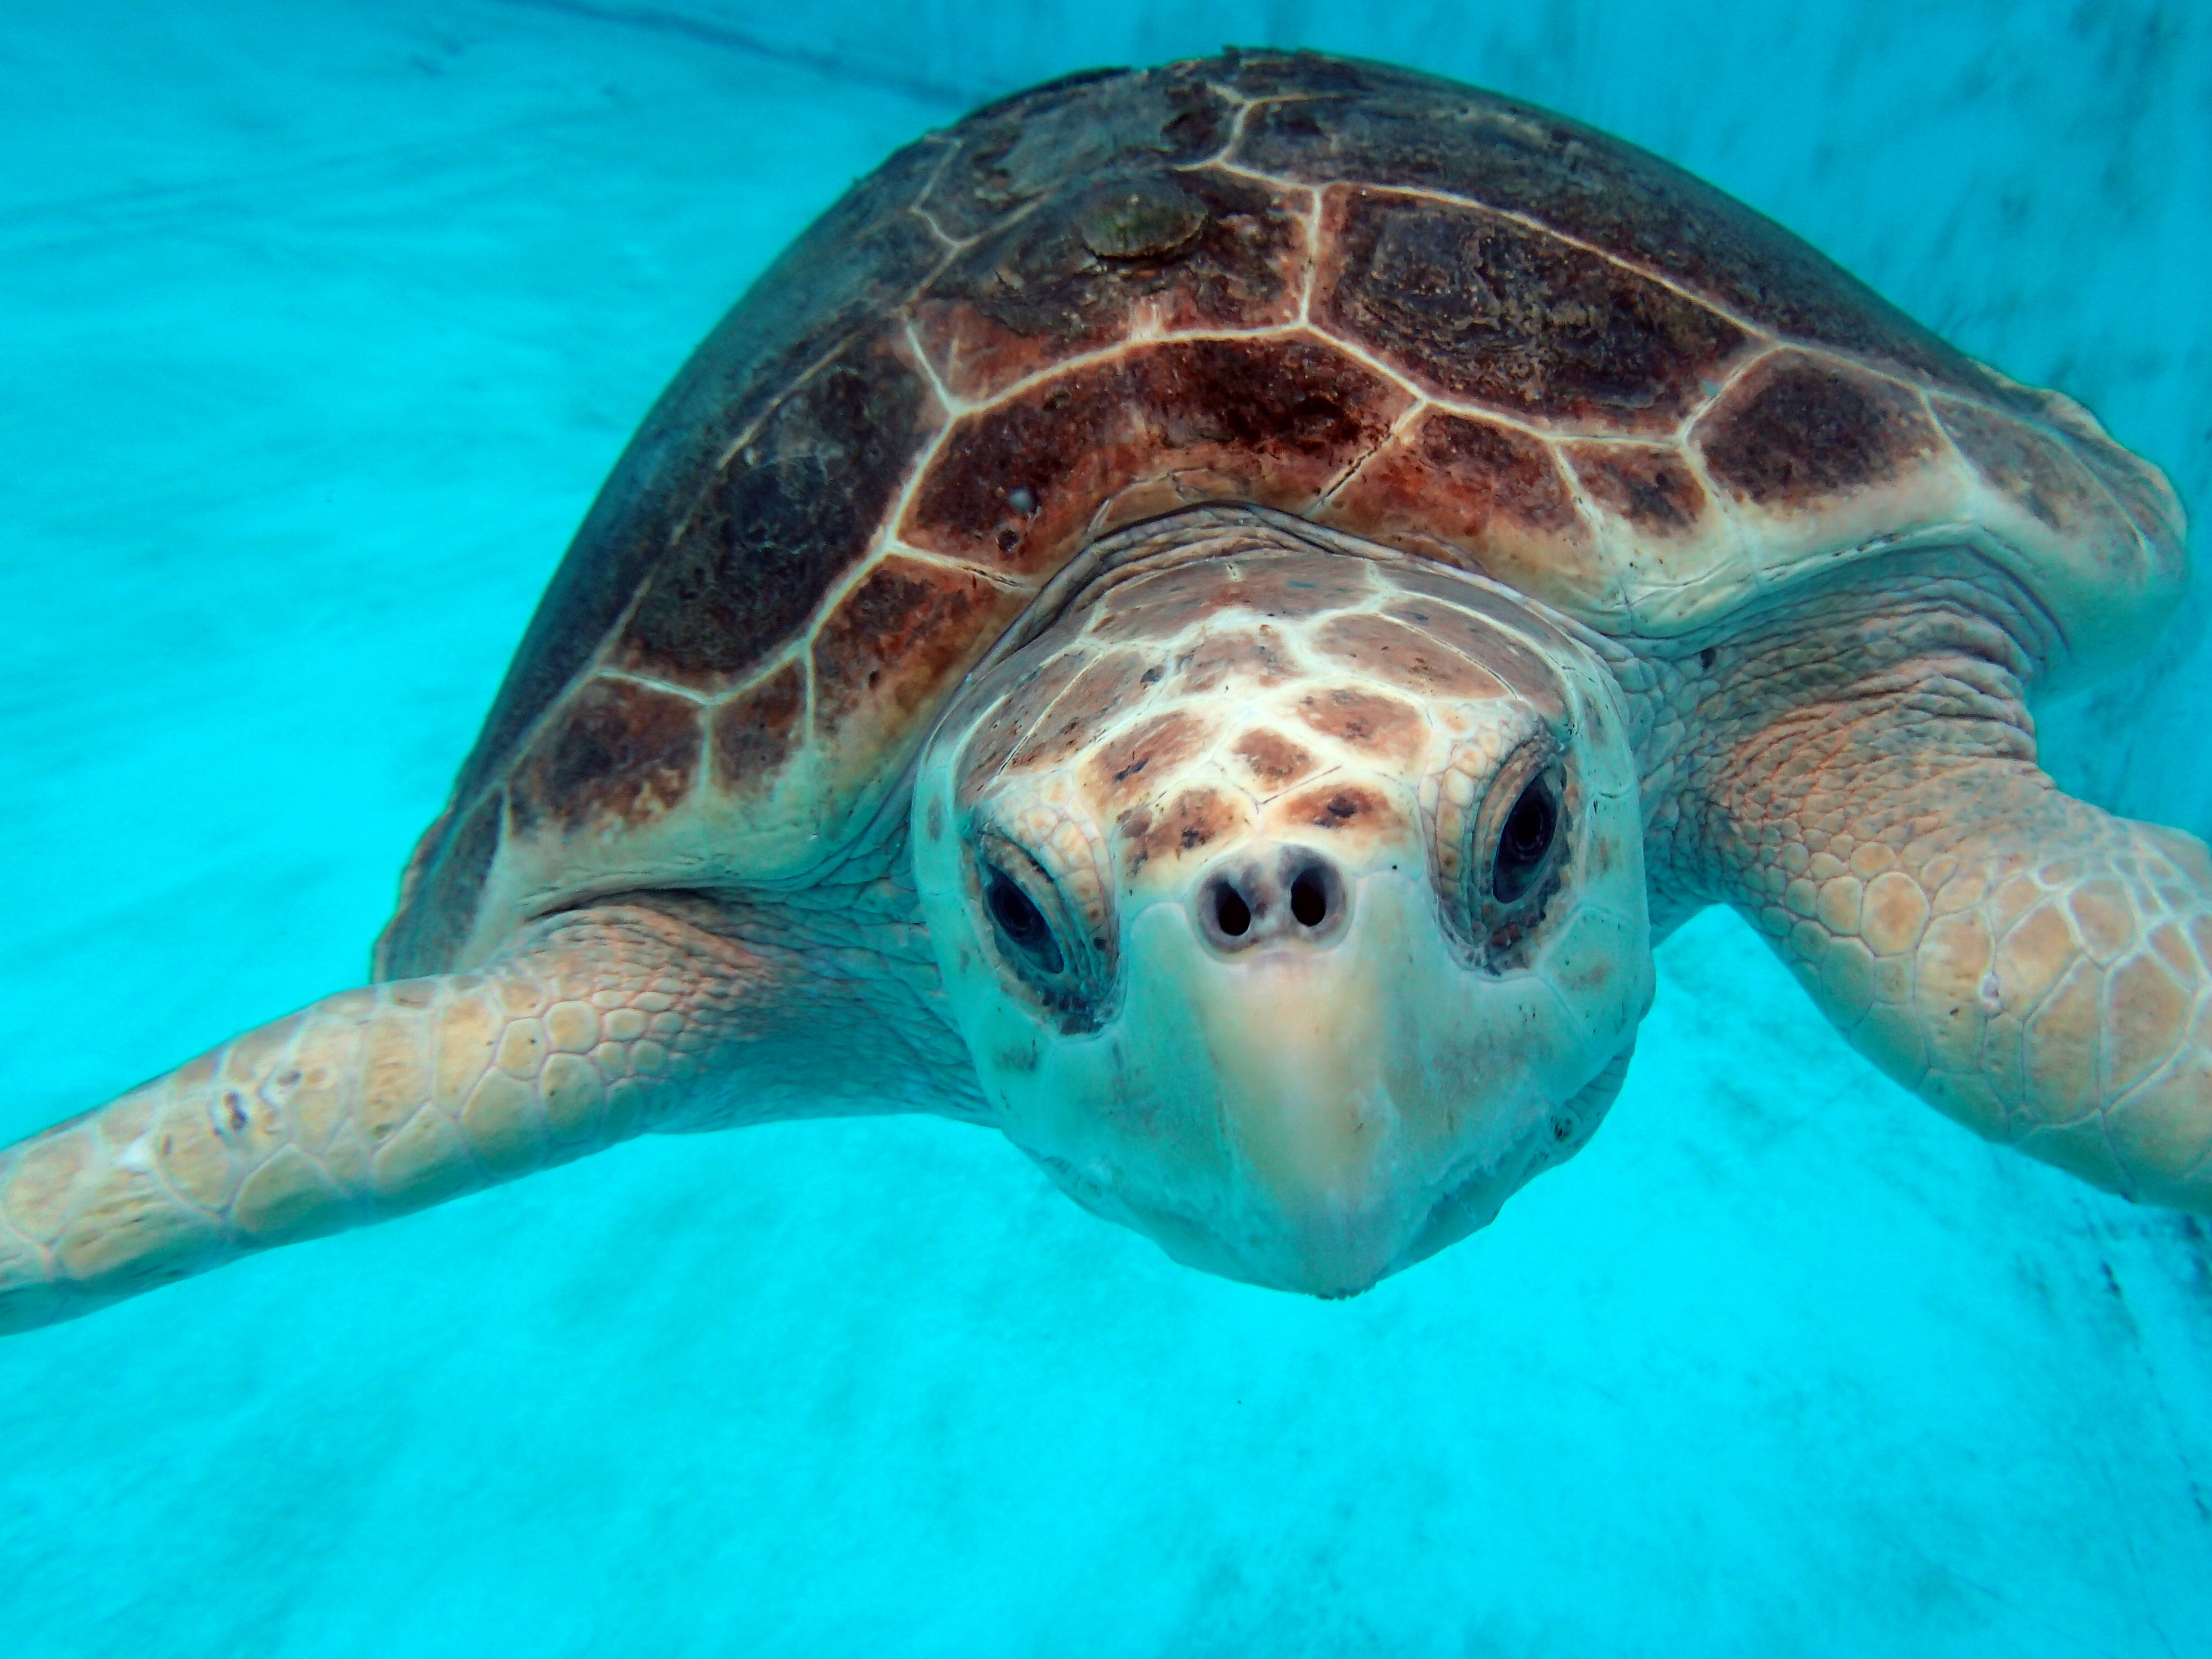 File:Turtle close up.jpg - Wikimedia Commons